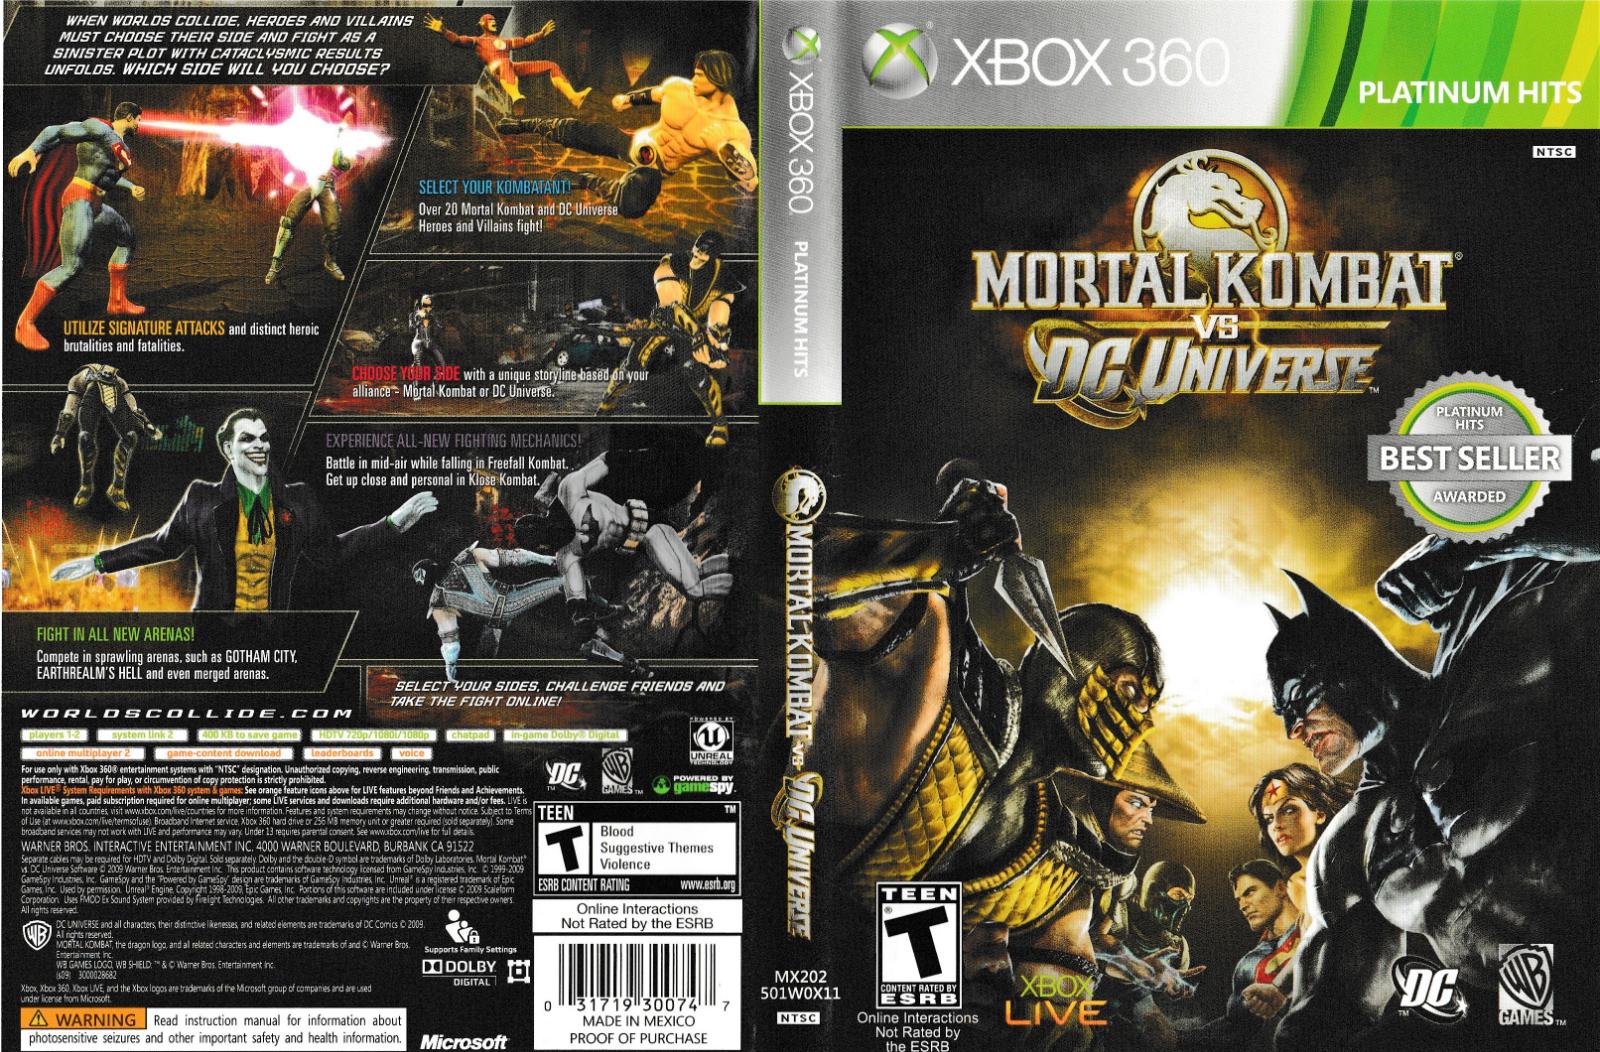 Batman xbox 360 freeboot. Mortal Kombat vs. DC Universe.